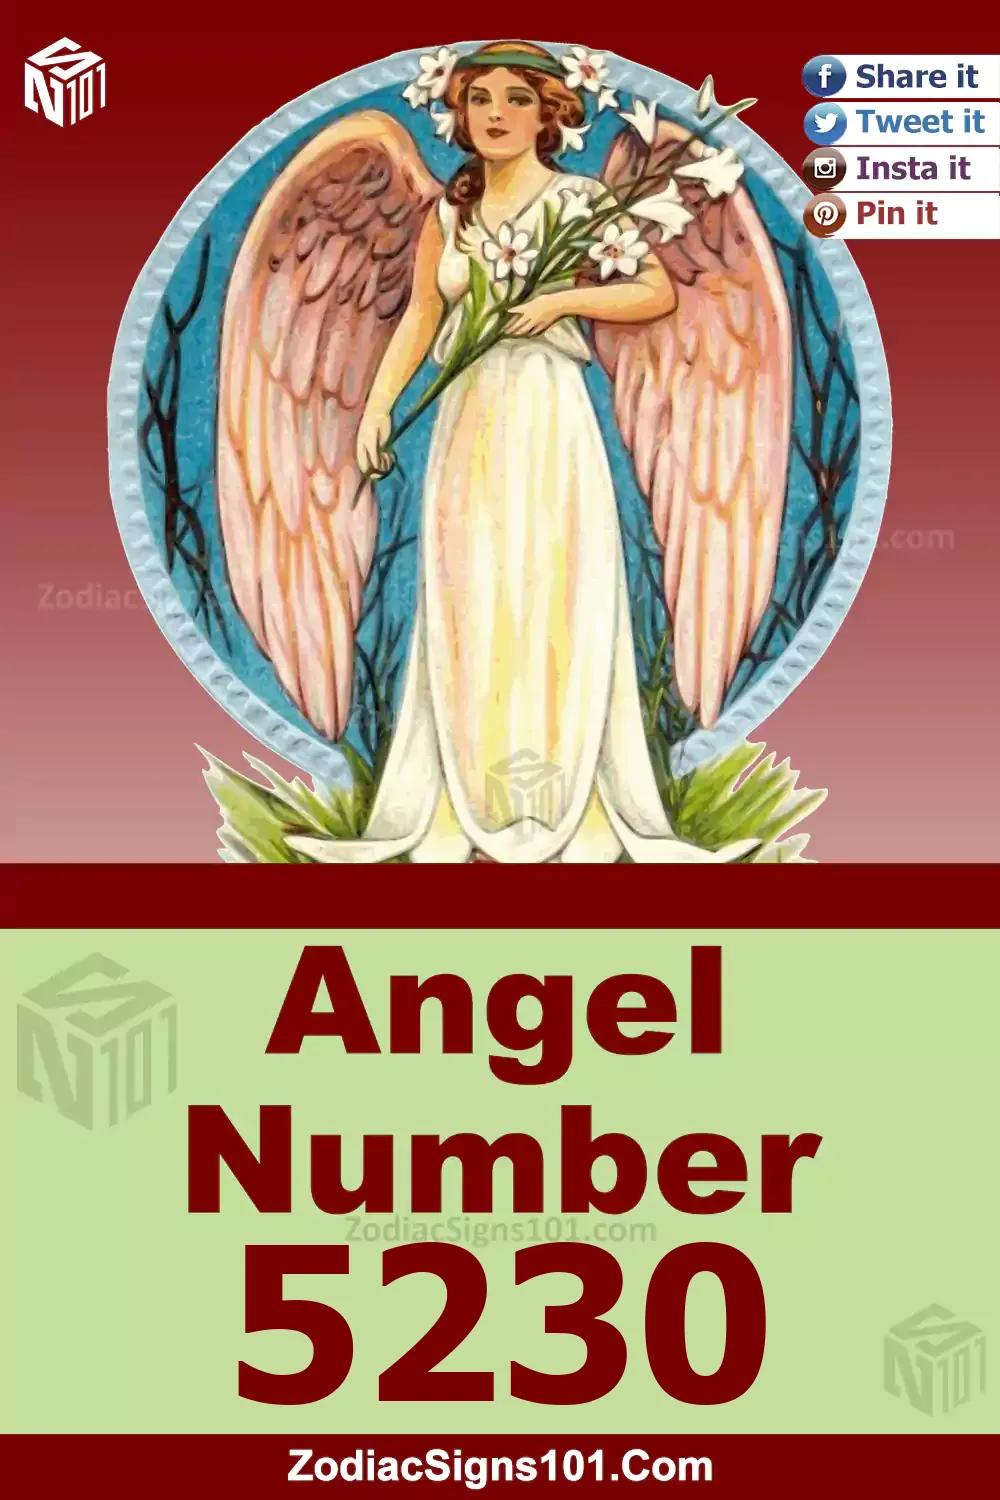 5230-Angel-Number-Meaning.jpg